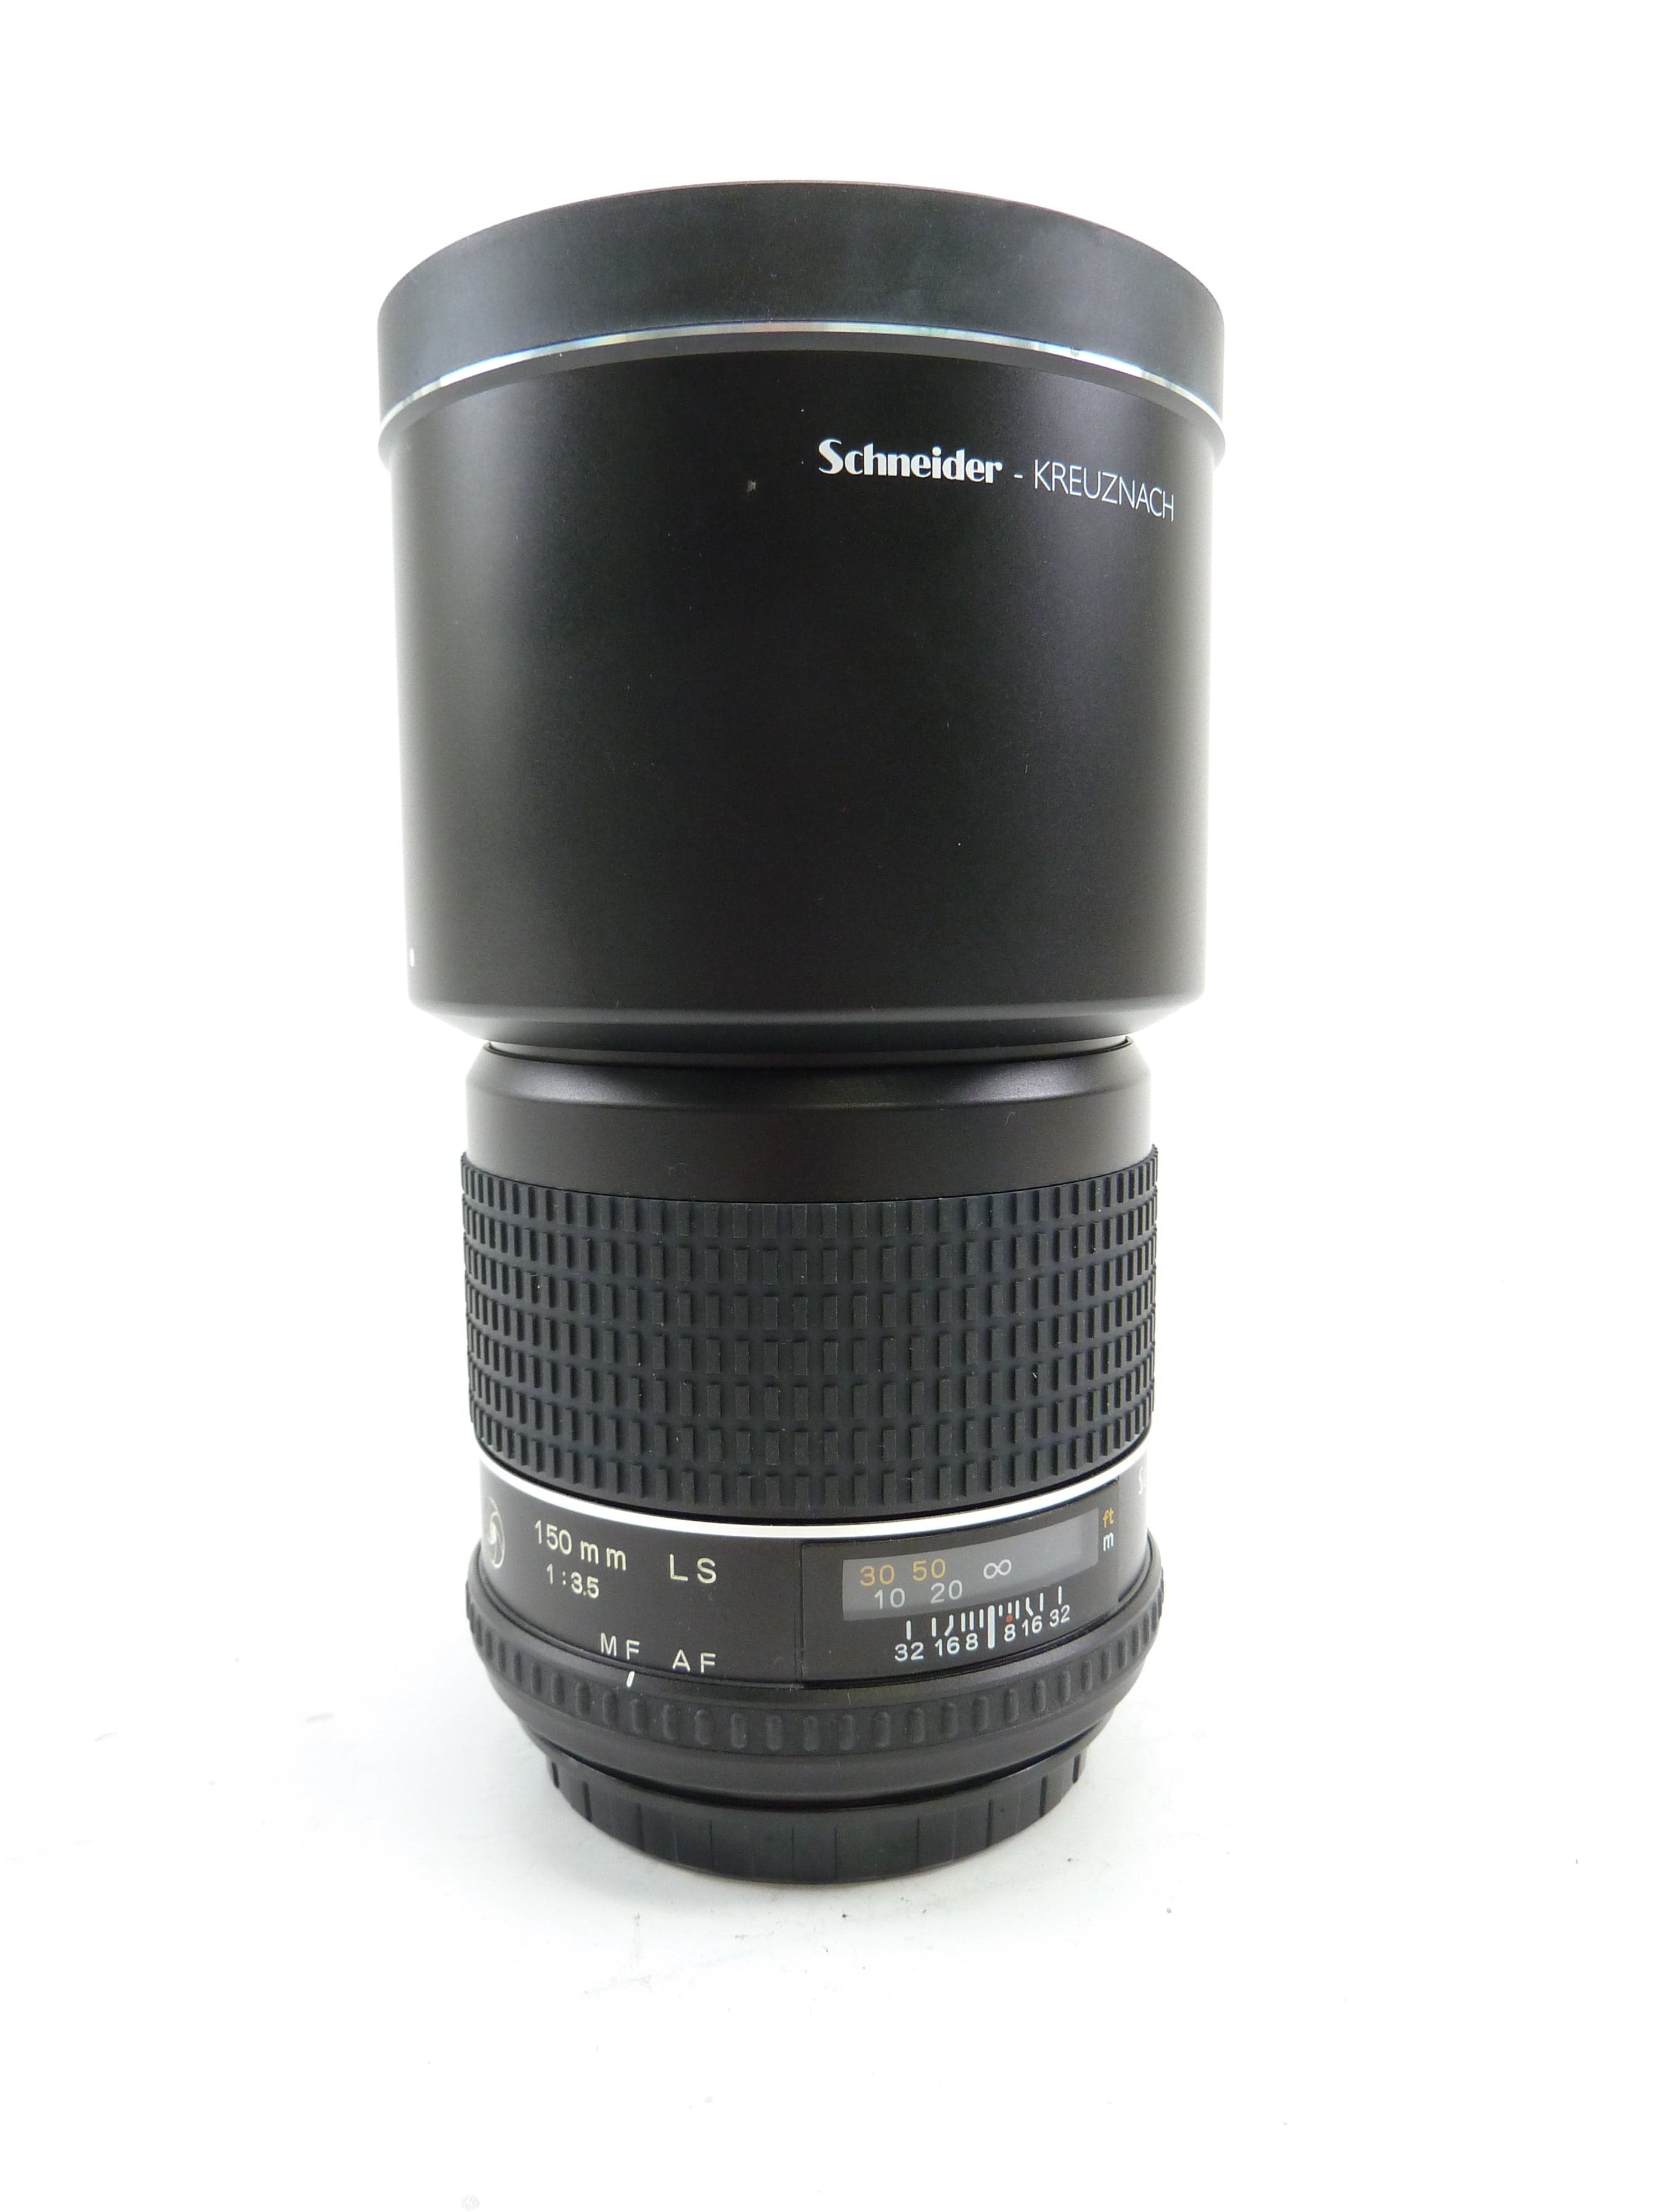 Phase One Schneider 150MM F3.5 L/S Lens